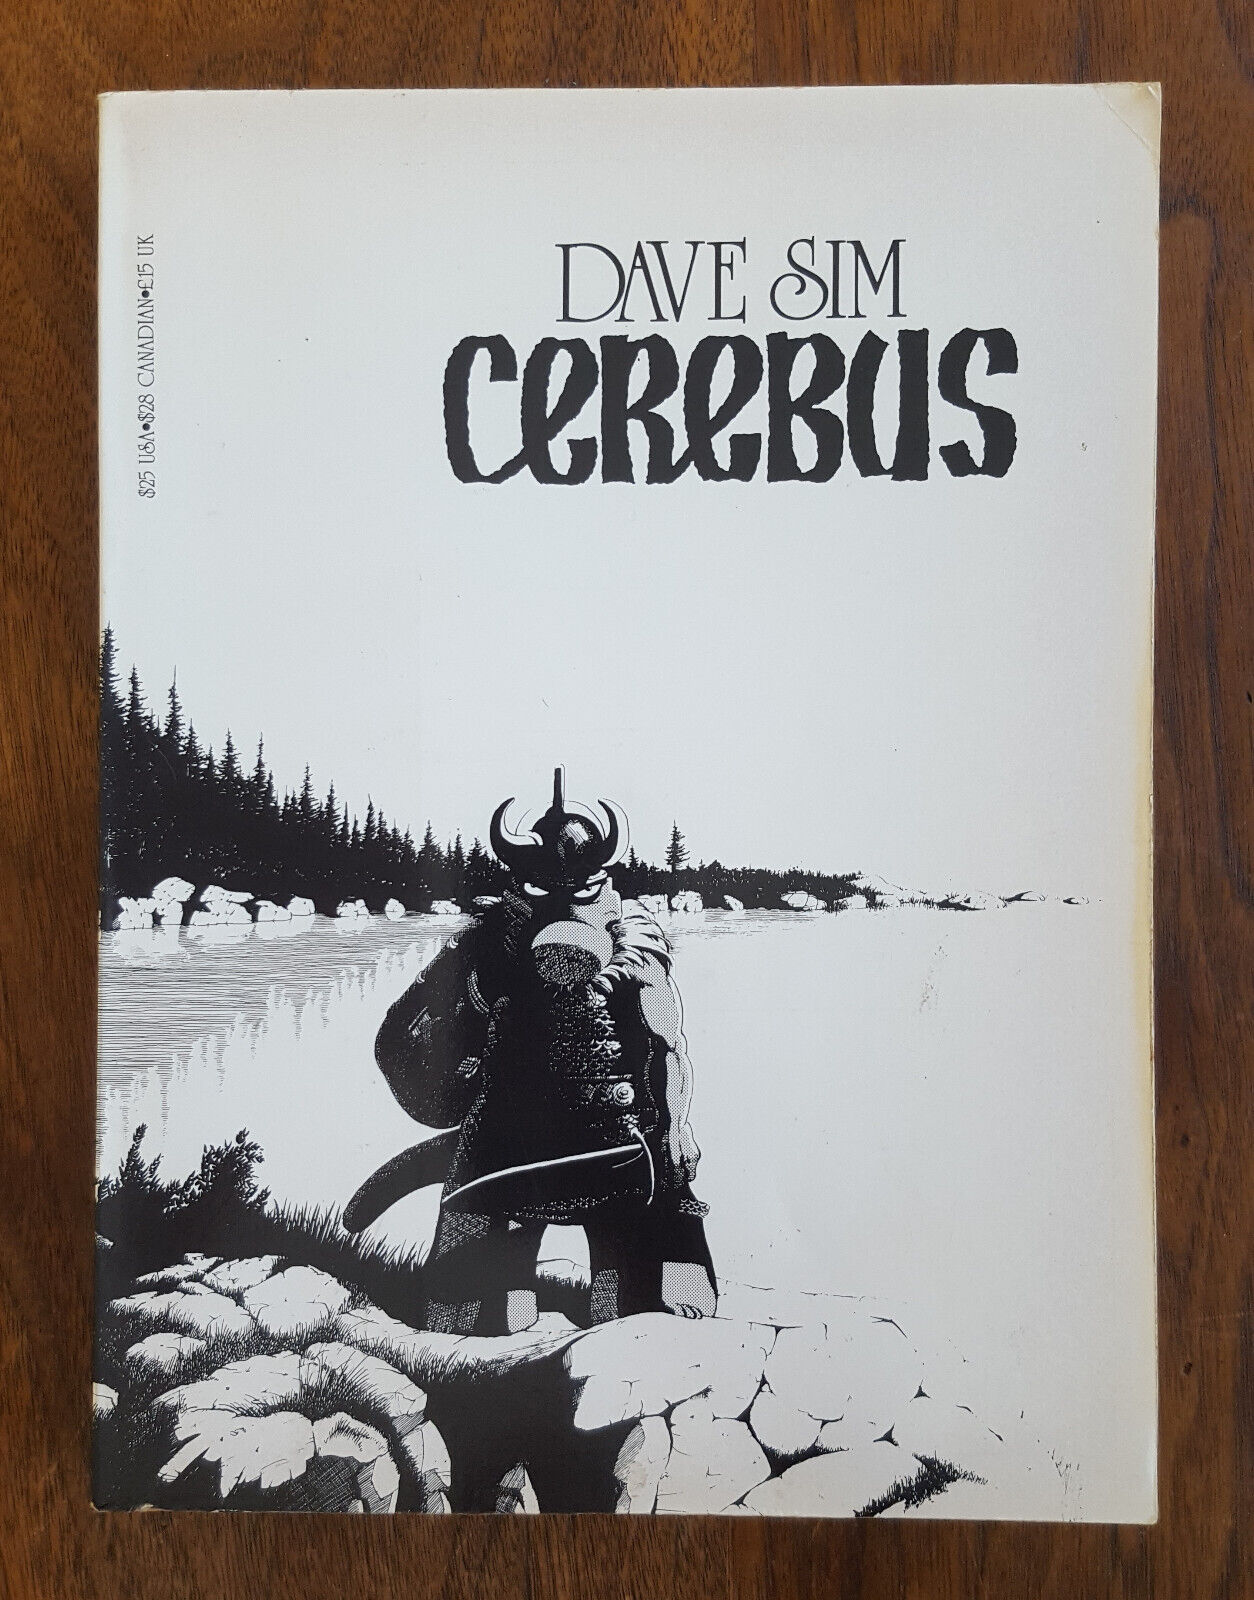 CEREBUS THE AARDVARK VOLUME 1 #1-25 COMIC GRAPHIC NOVEL TPB DAVE SIM 1990